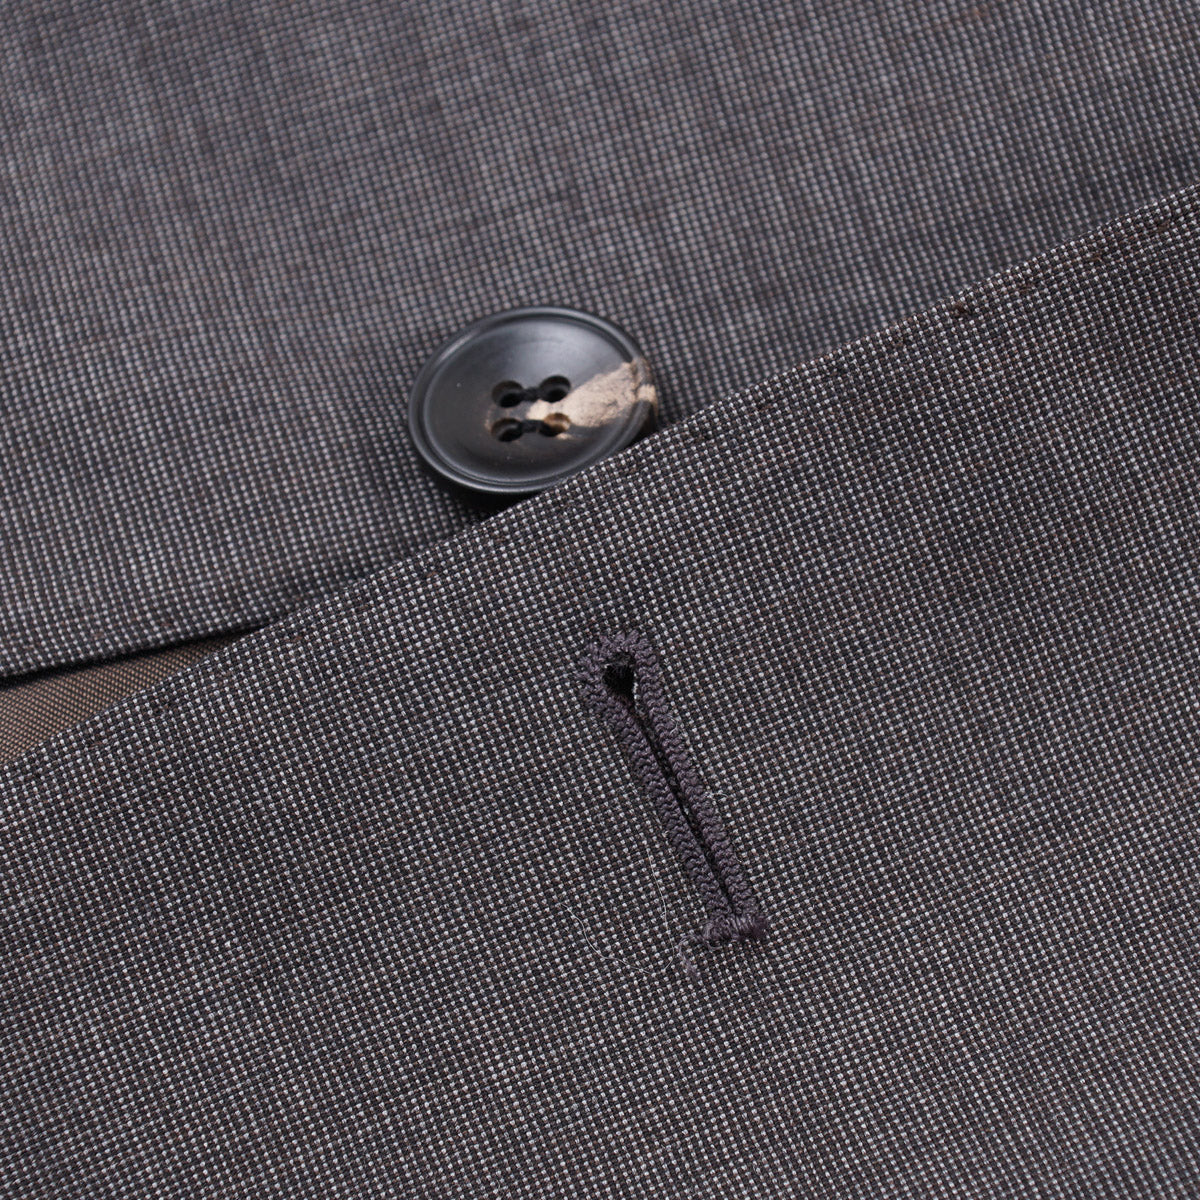 Sartorio Slim-Fit Super 140s Suit - Top Shelf Apparel